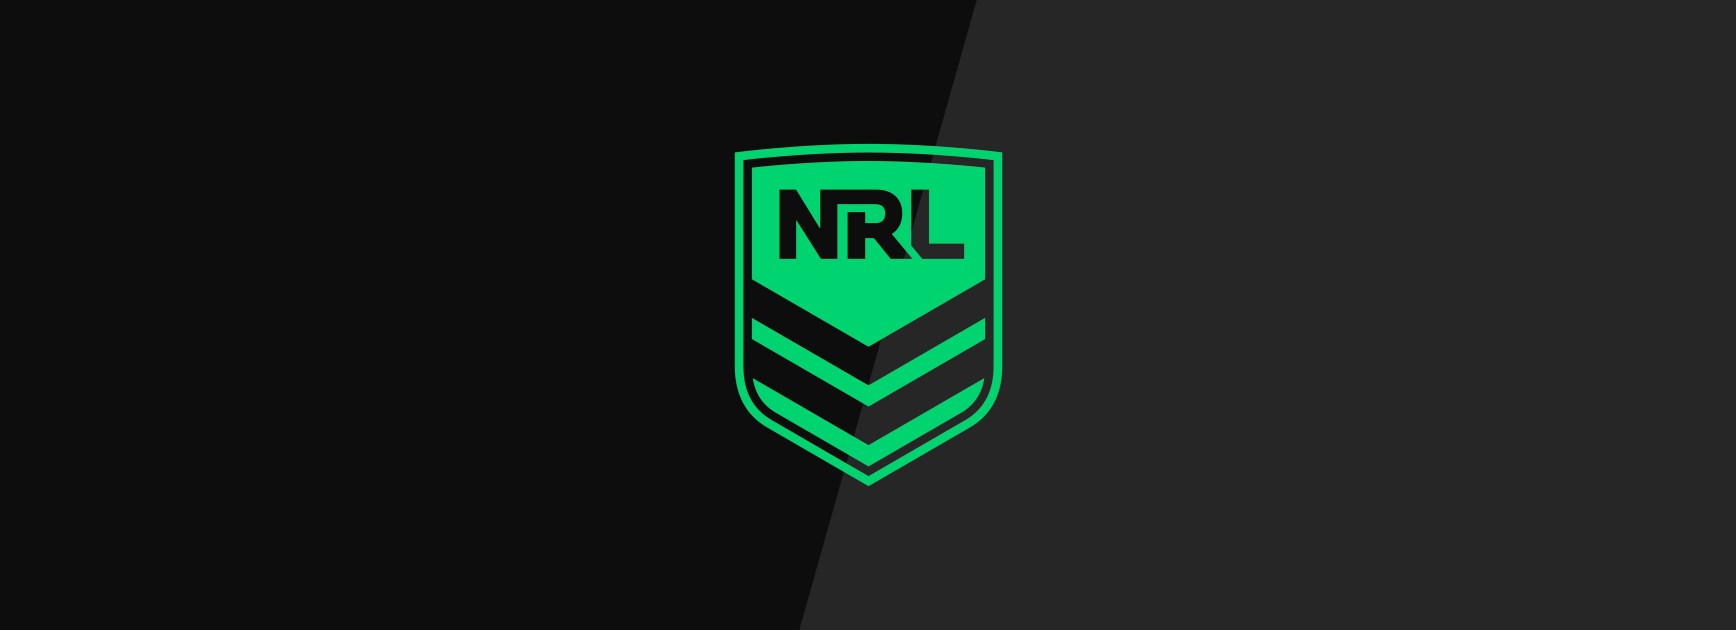 NRL and RLPA aligned on player pay talks